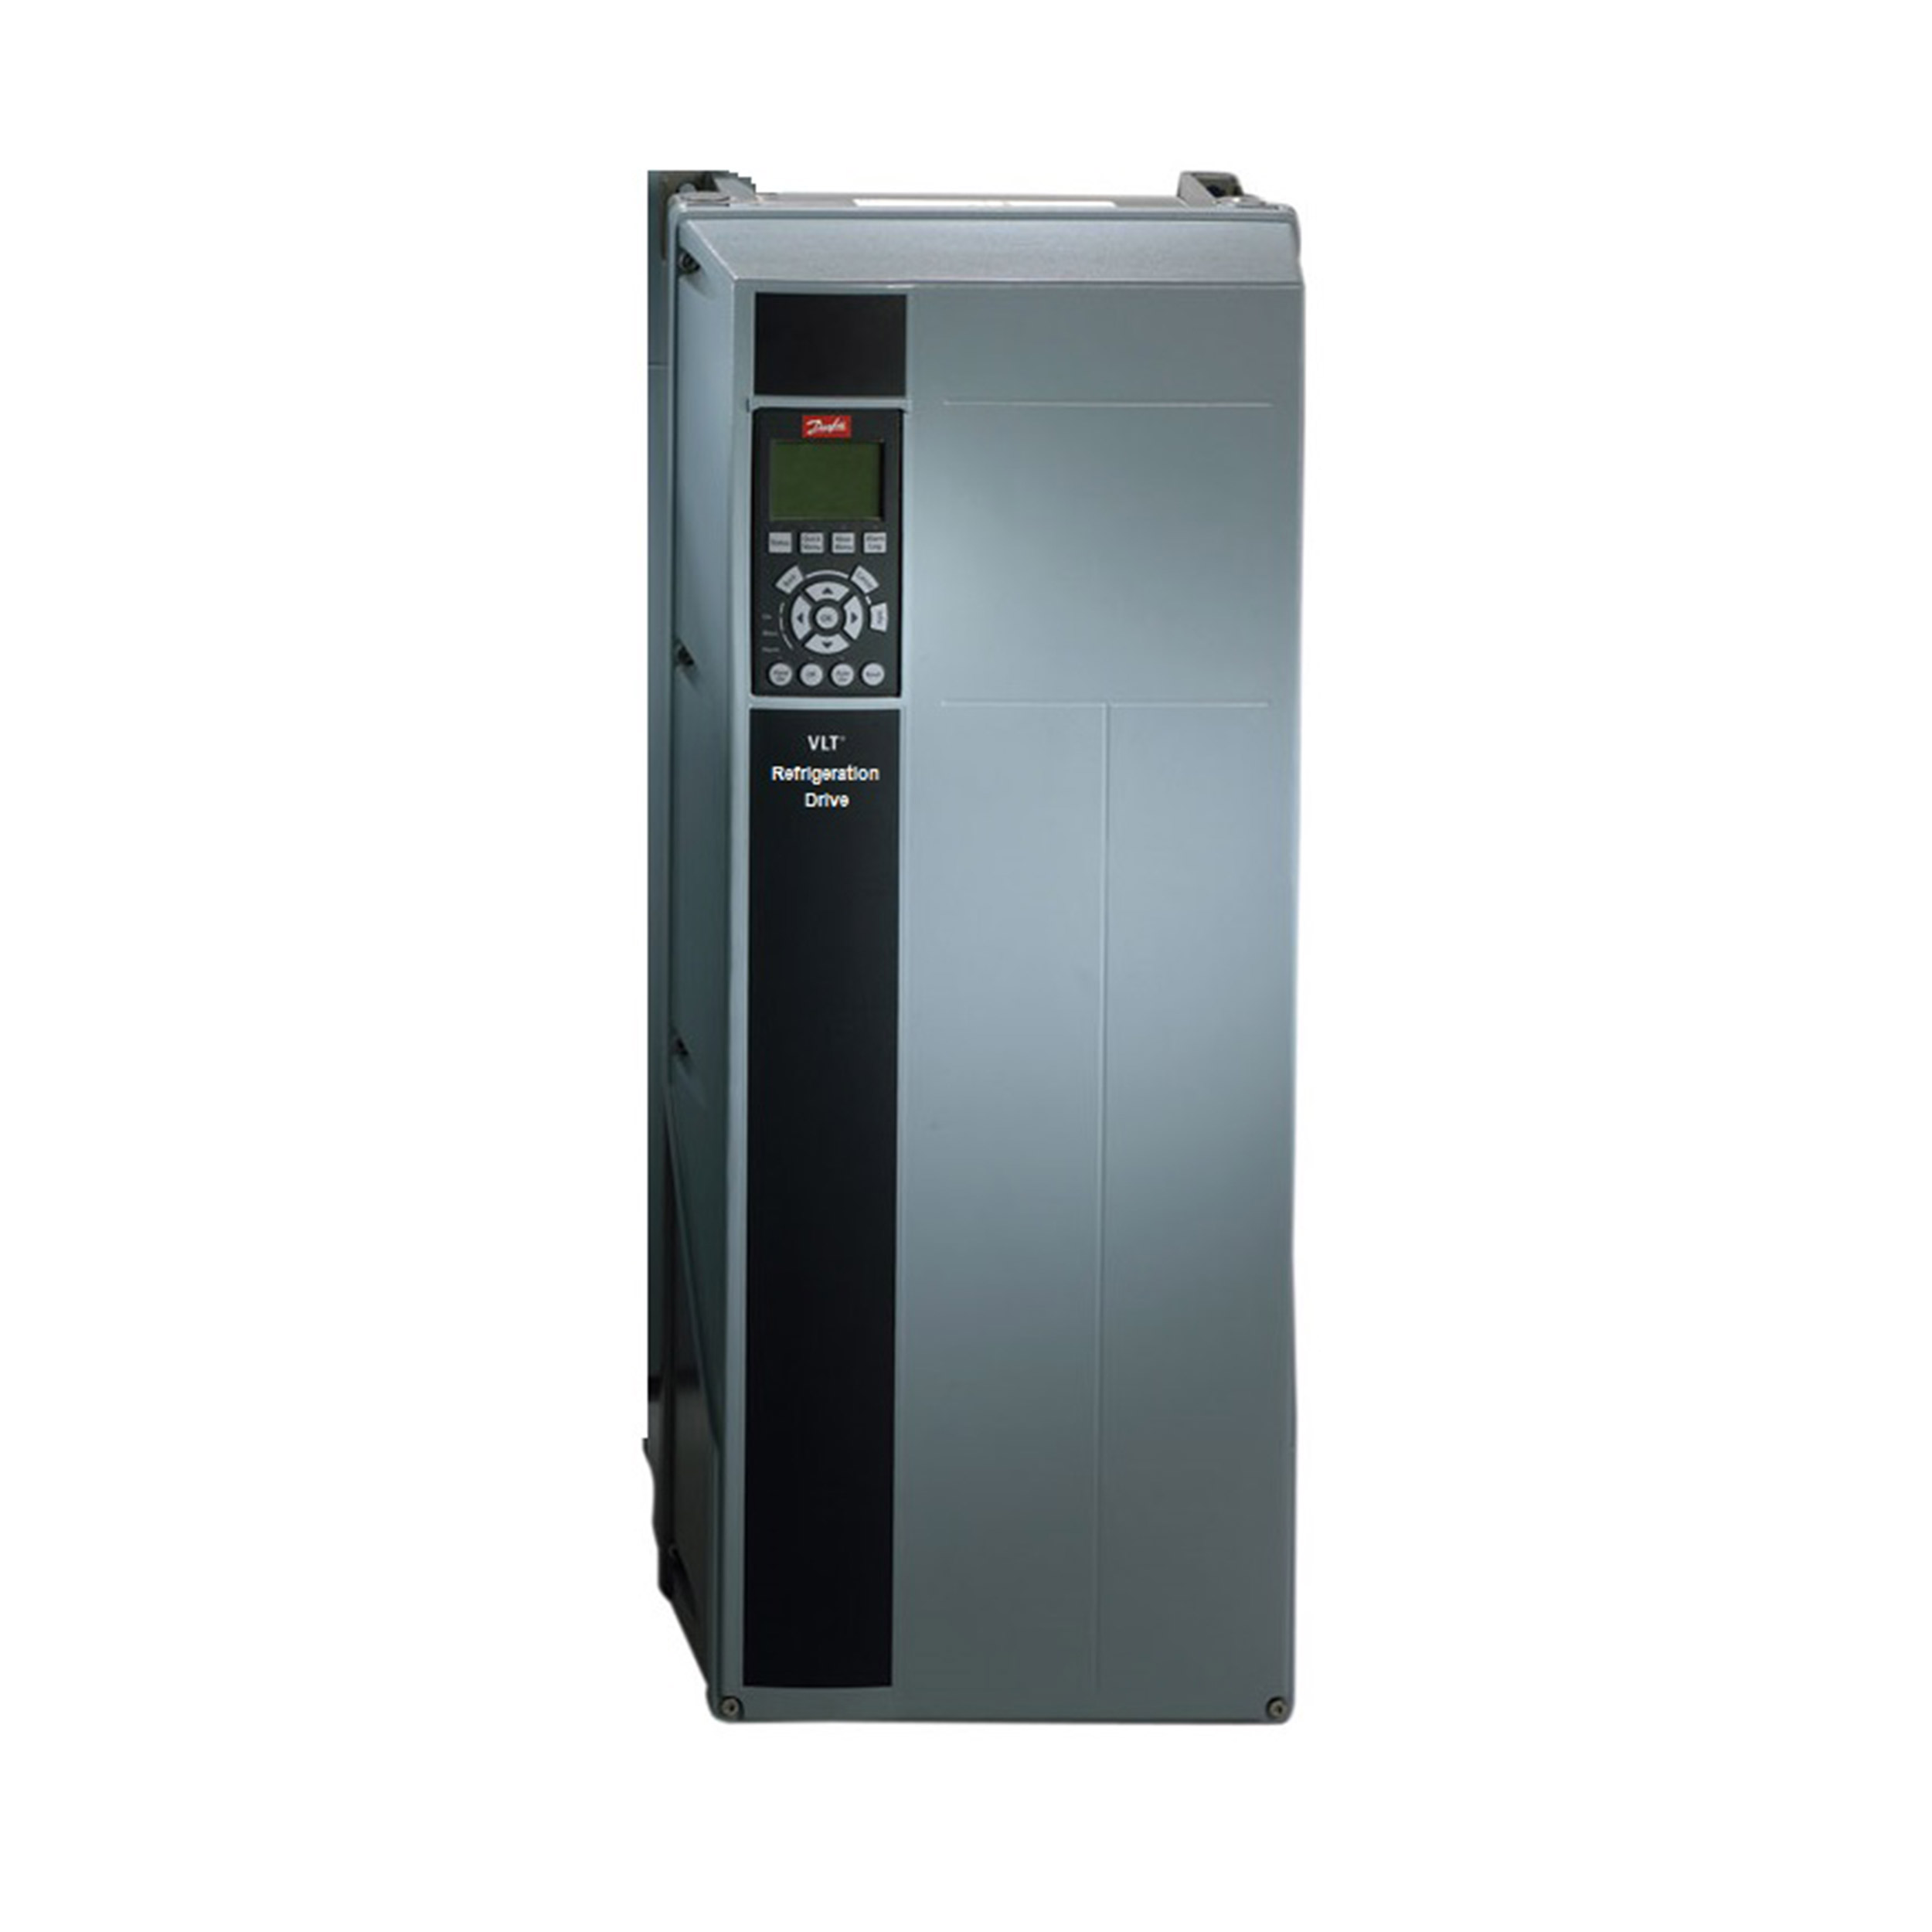 134F7998 VLT Refrigeration Drive FC 103